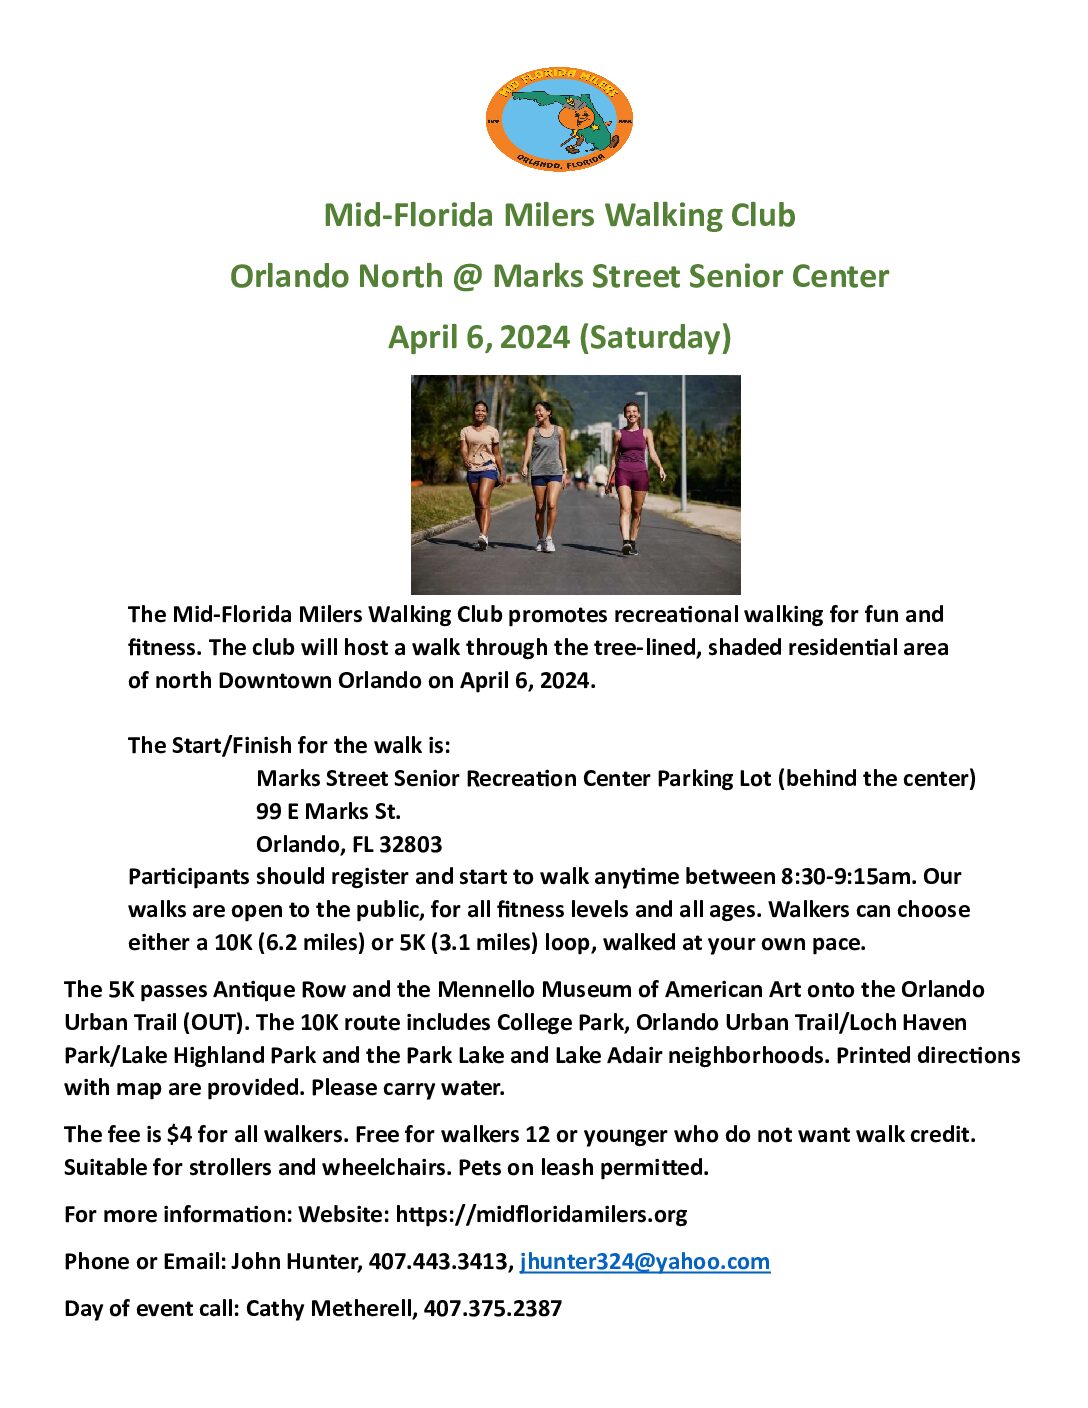 Mid-Florida Miler Club – Orlando North @ Marks Street Senior Center